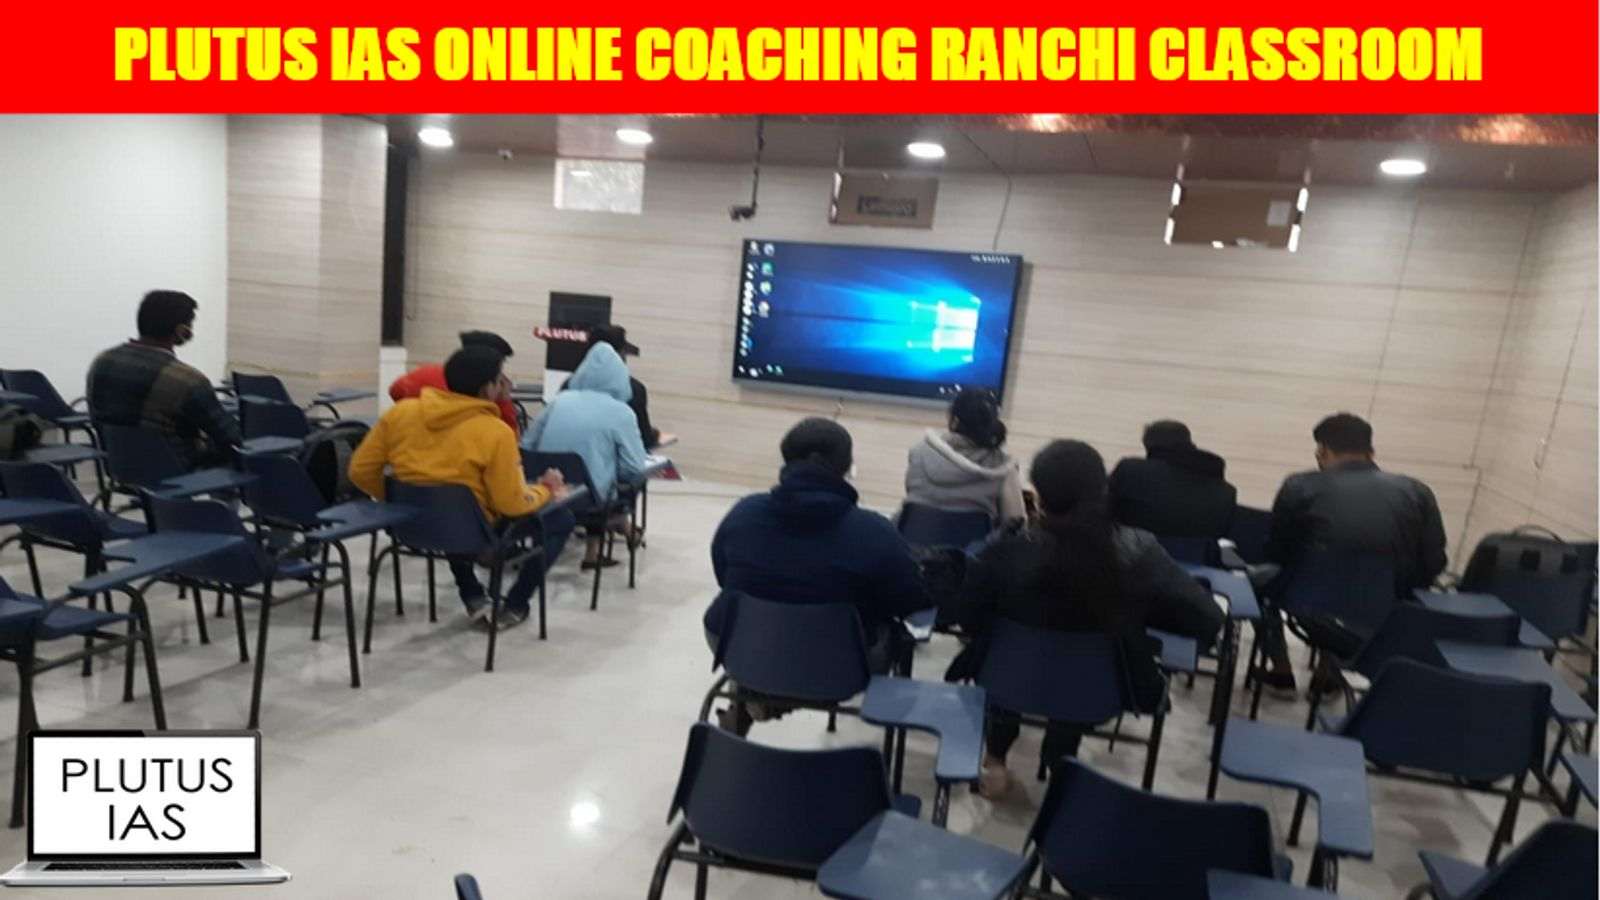 Plutus IAS Online Coaching Ranchi Class Room